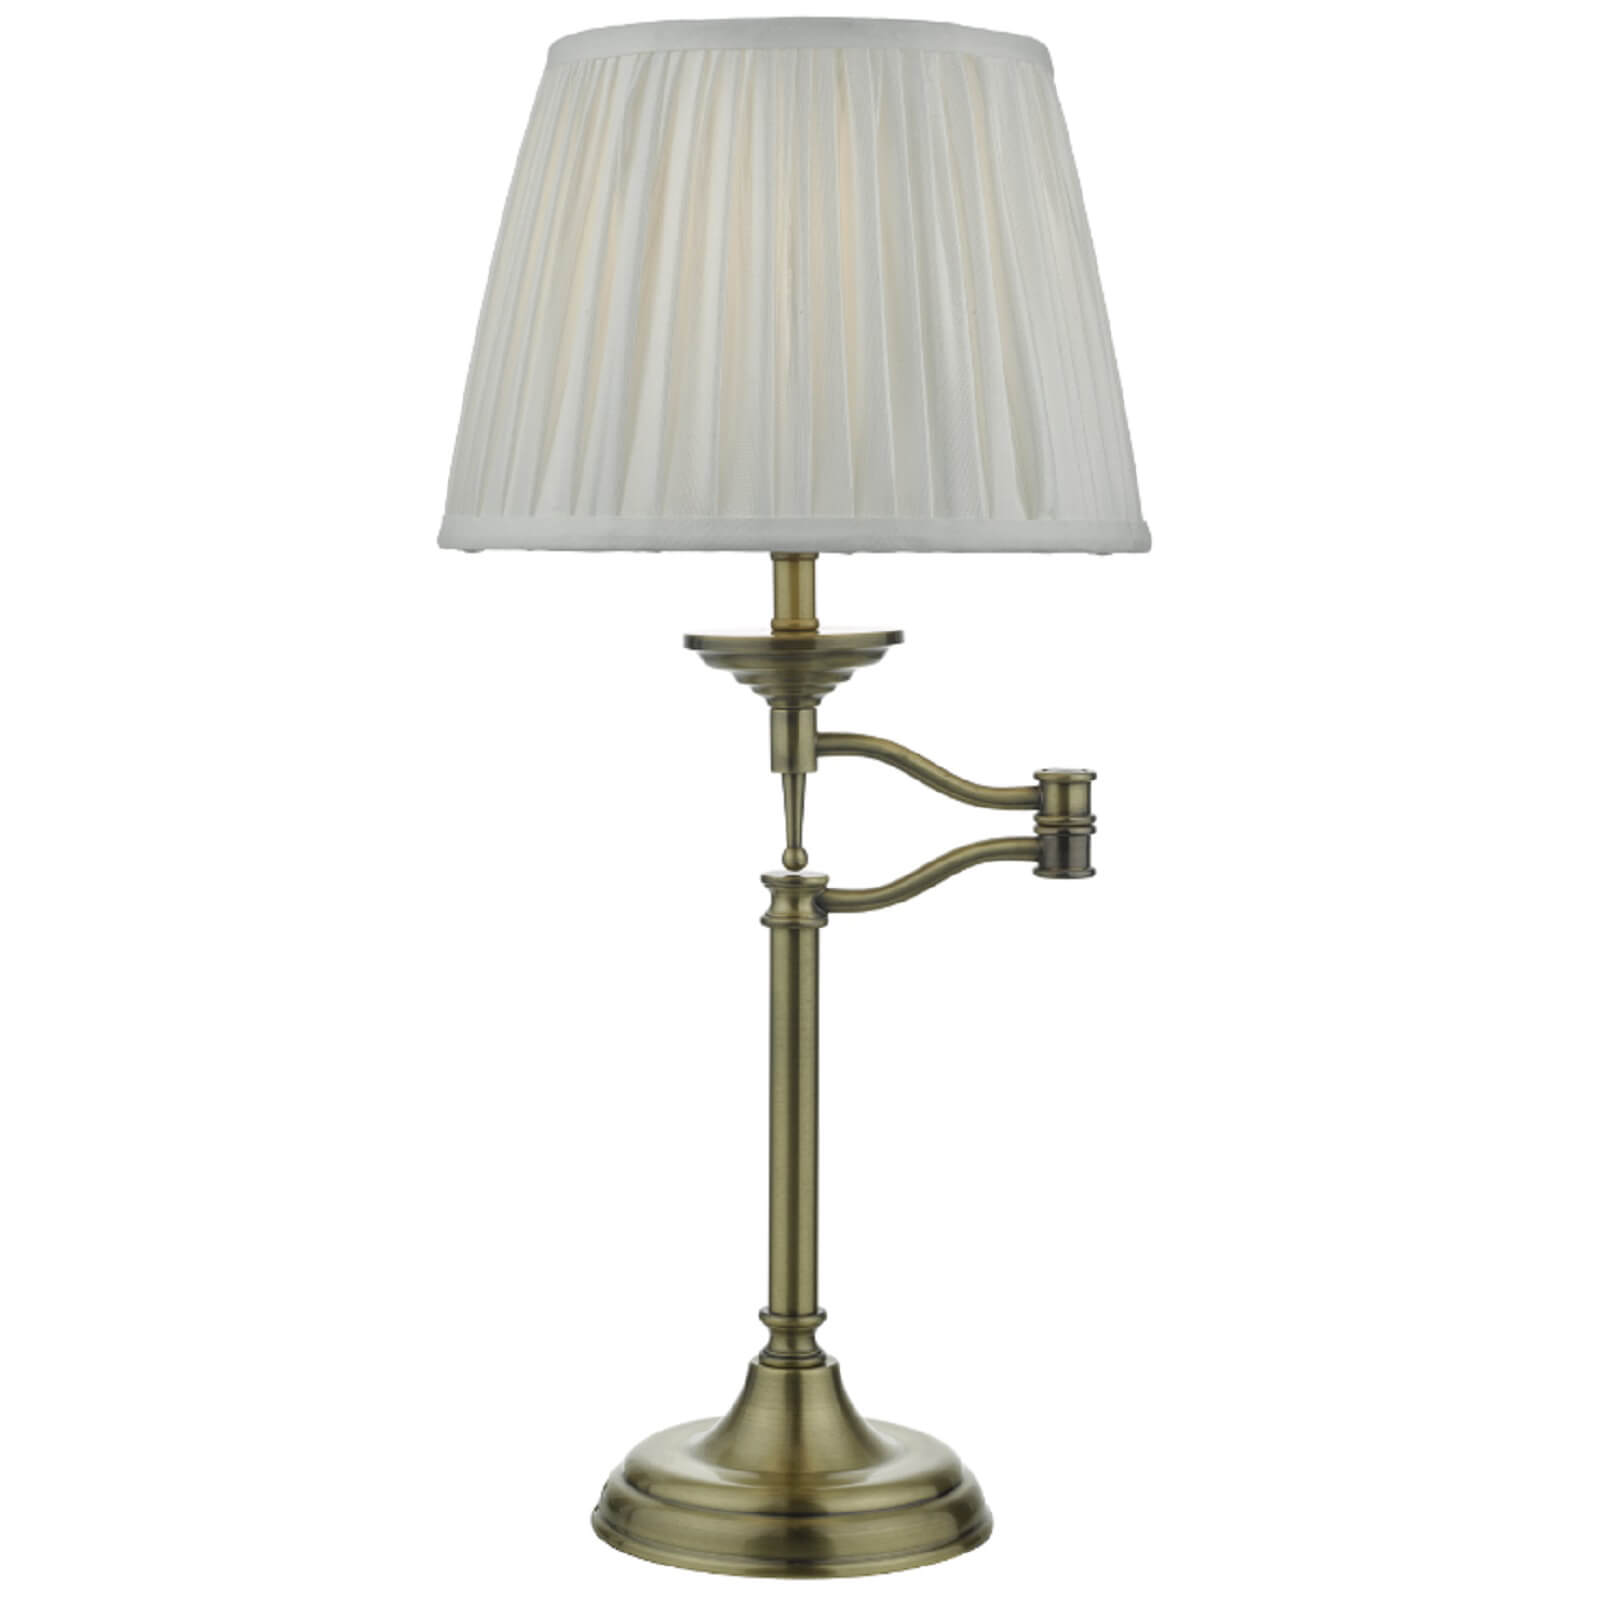 Artie Swing Arm Table Lamp - Antique Brass